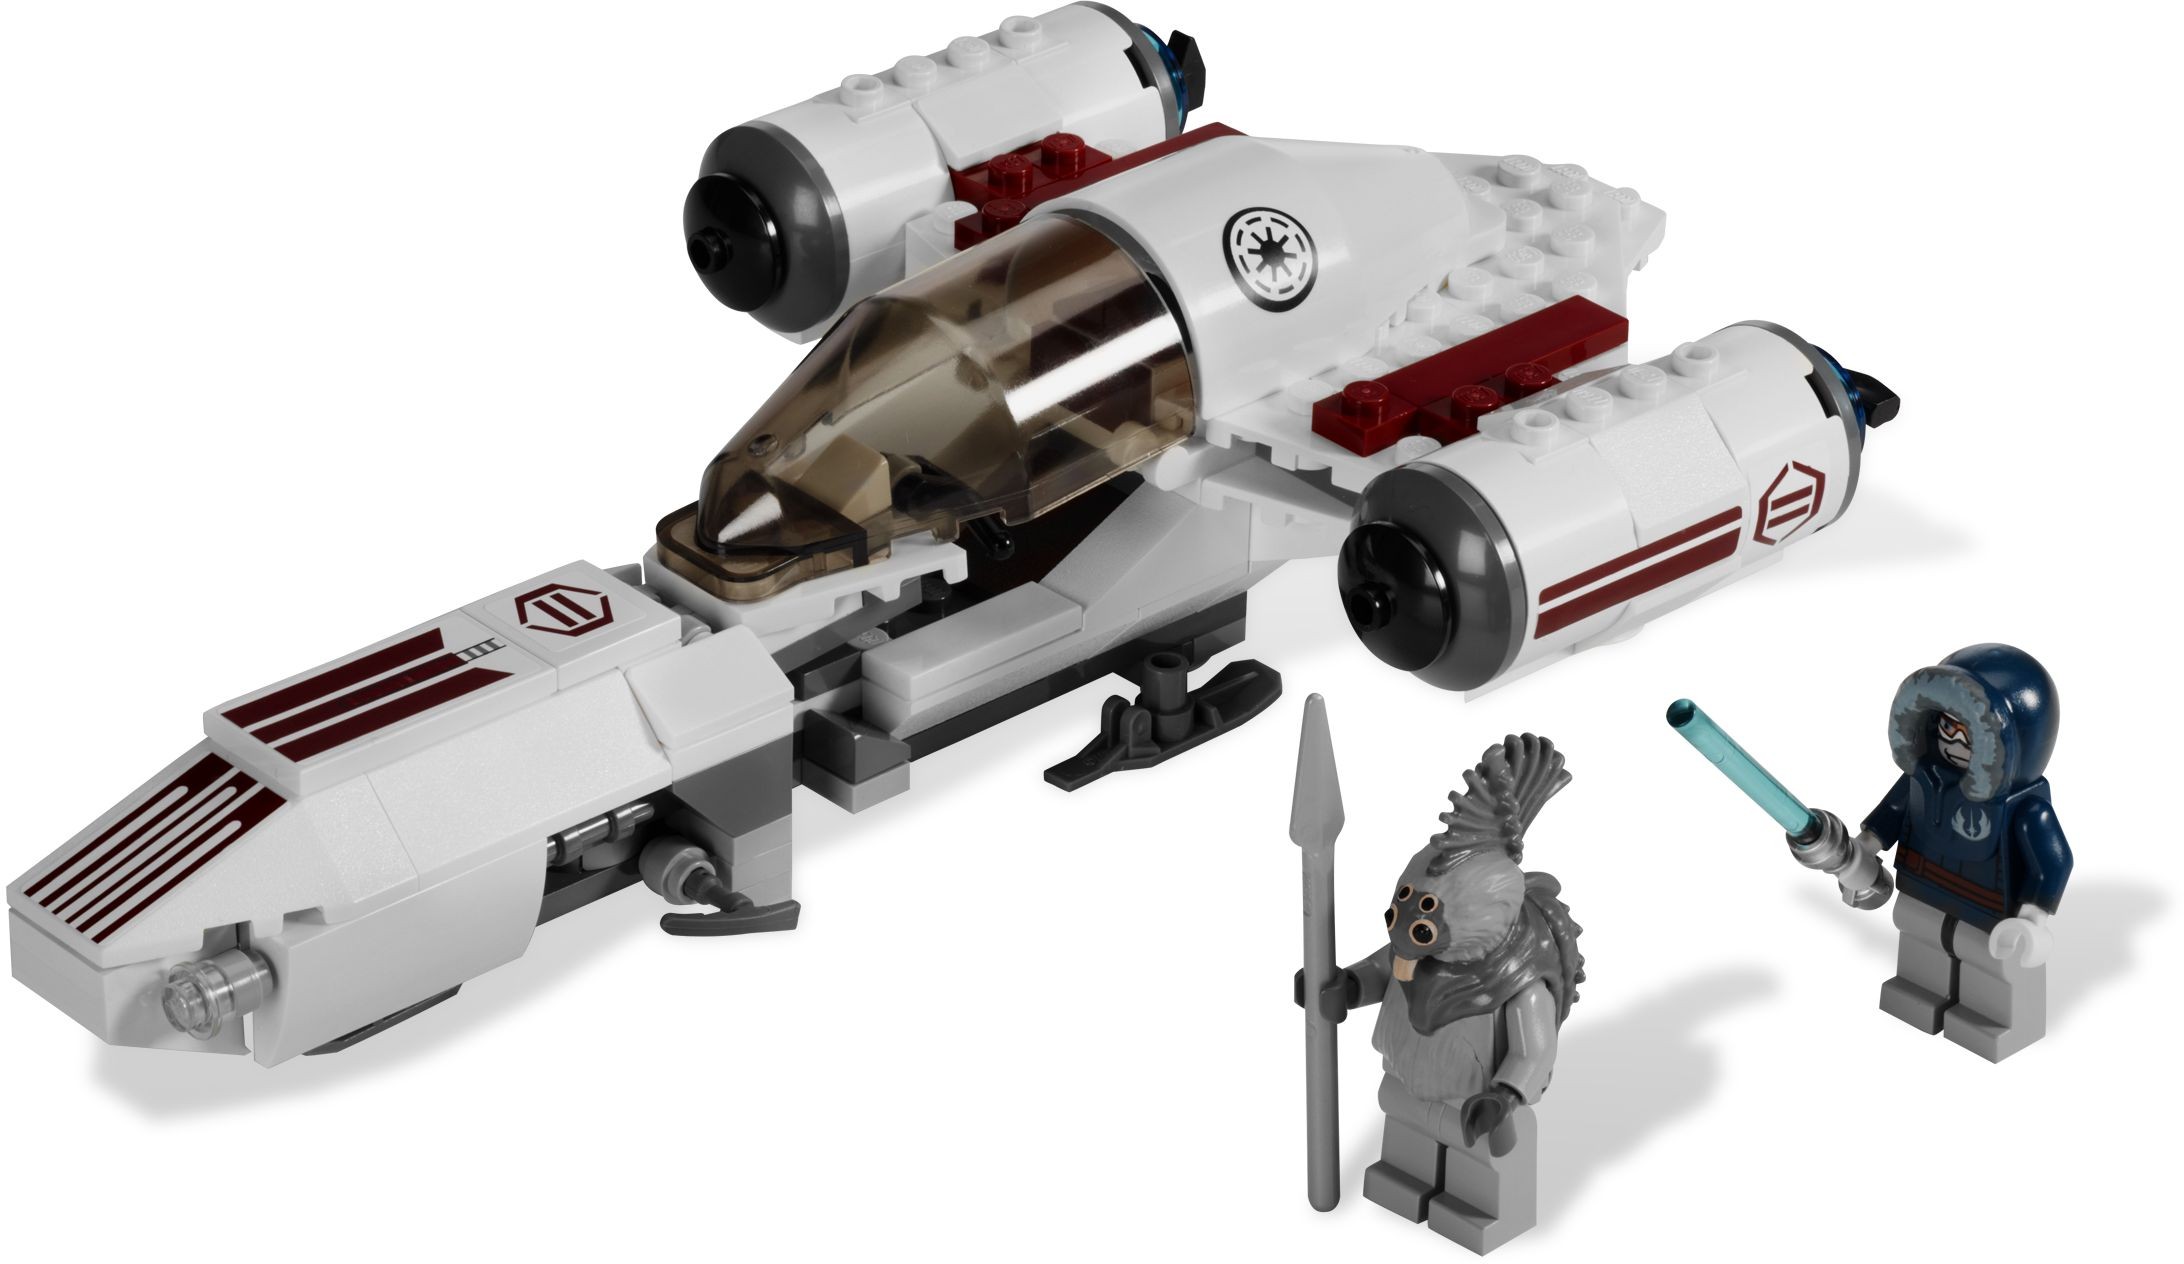 Lego Star Wars Sets 2010